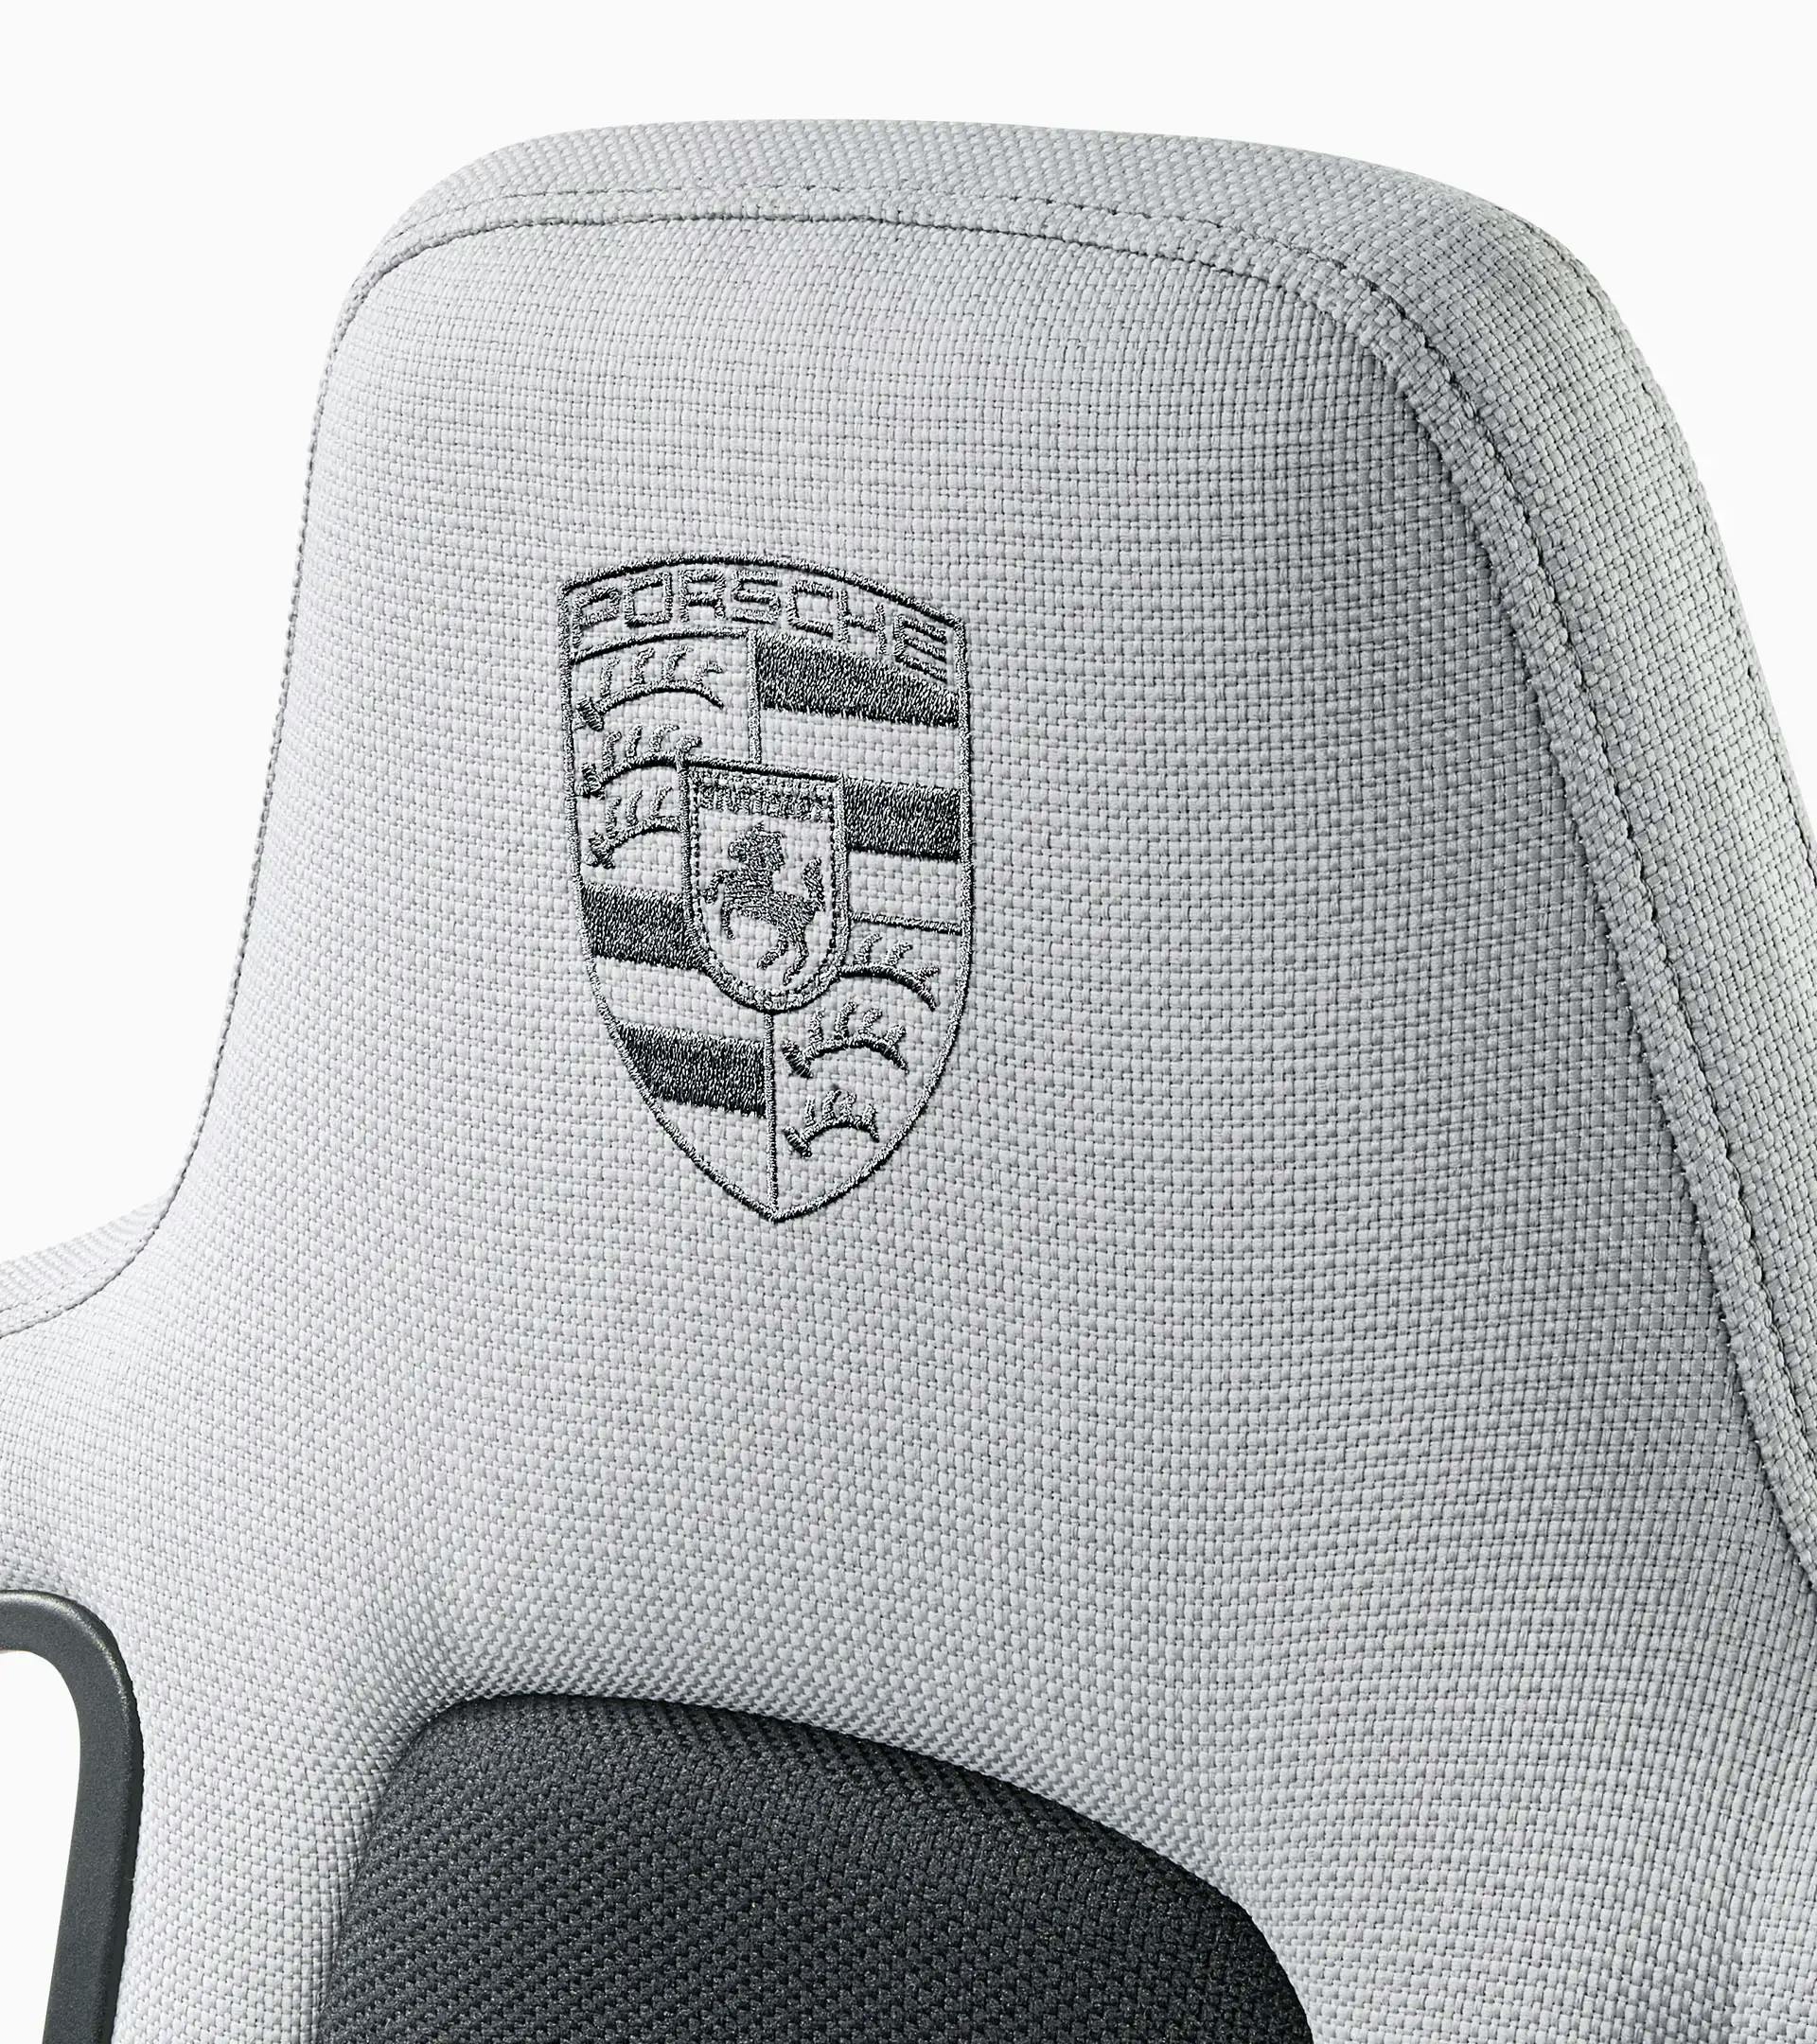 RECARO x Porsche Gaming Chair Limited Edition 6